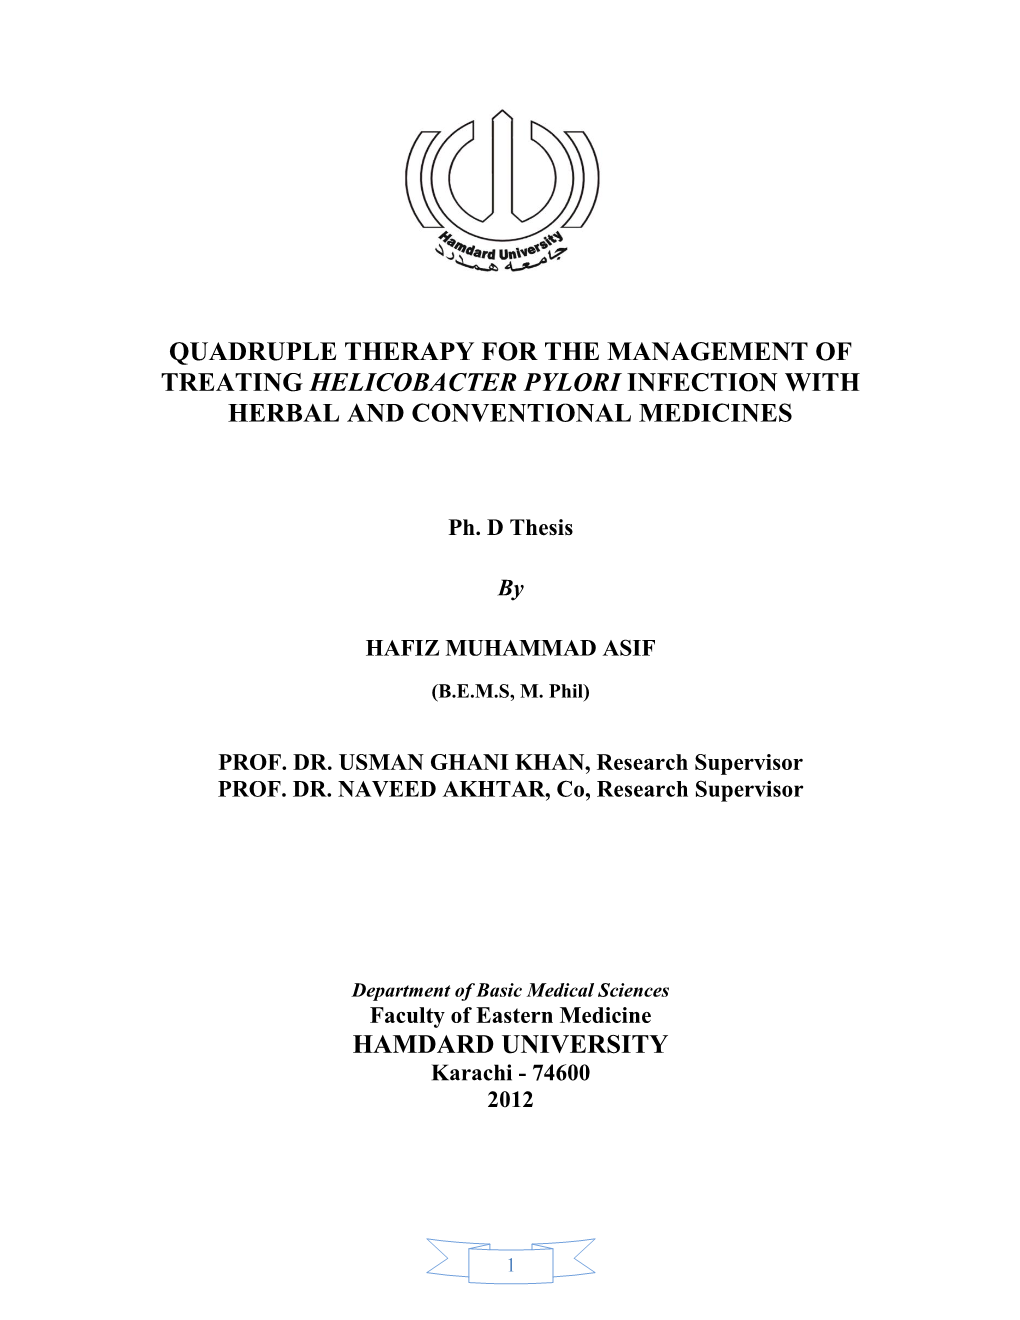 Ph. D Thesis by HAFIZ MUHAMMAD ASIF